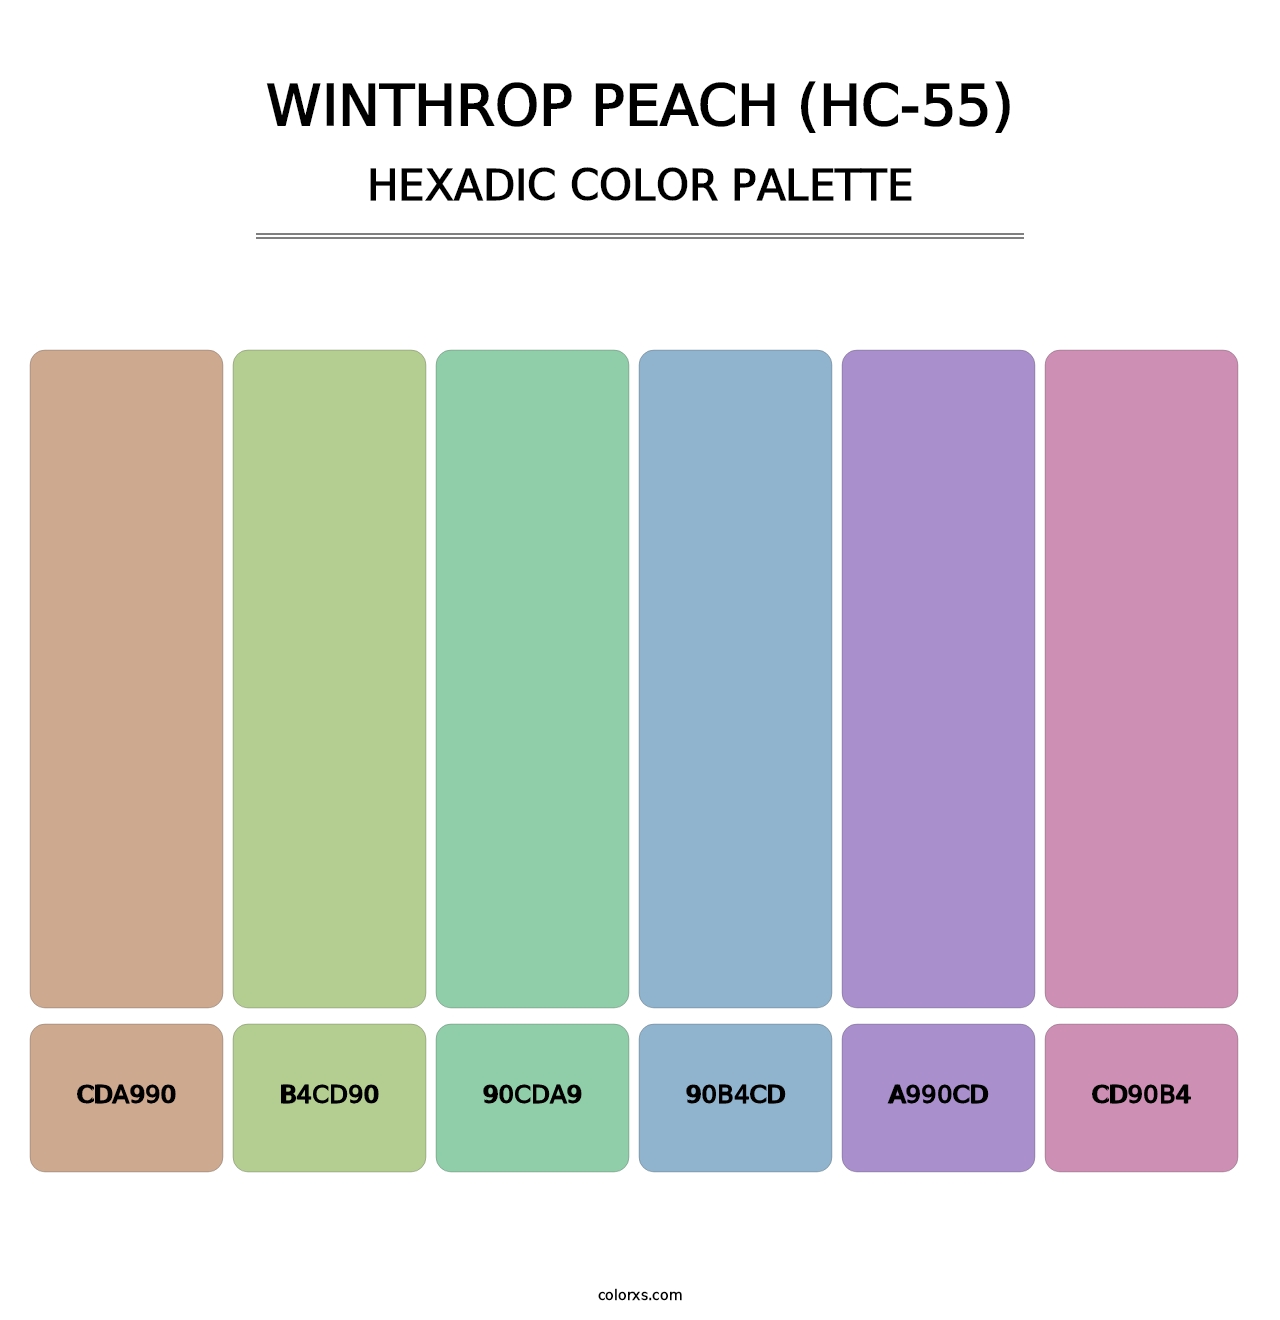 Winthrop Peach (HC-55) - Hexadic Color Palette